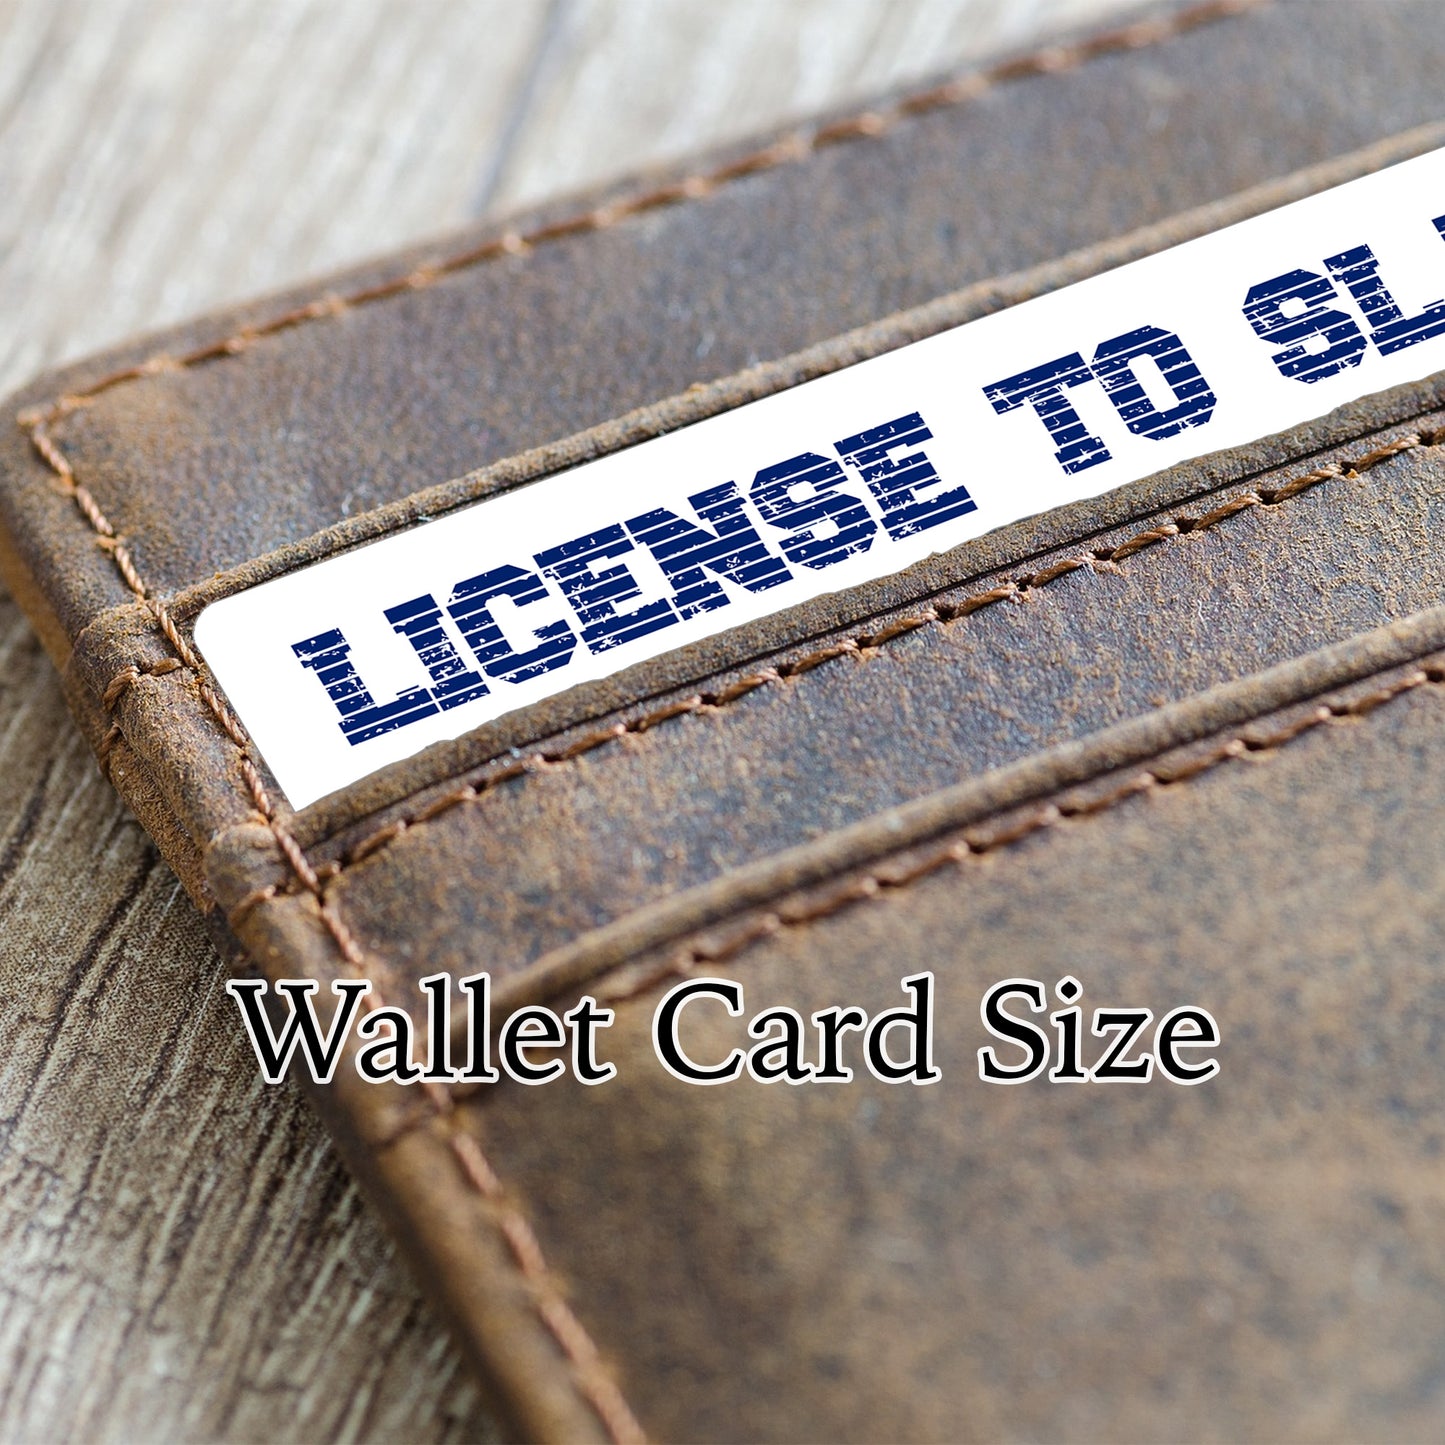 Biromantic pride personalised license to slay card